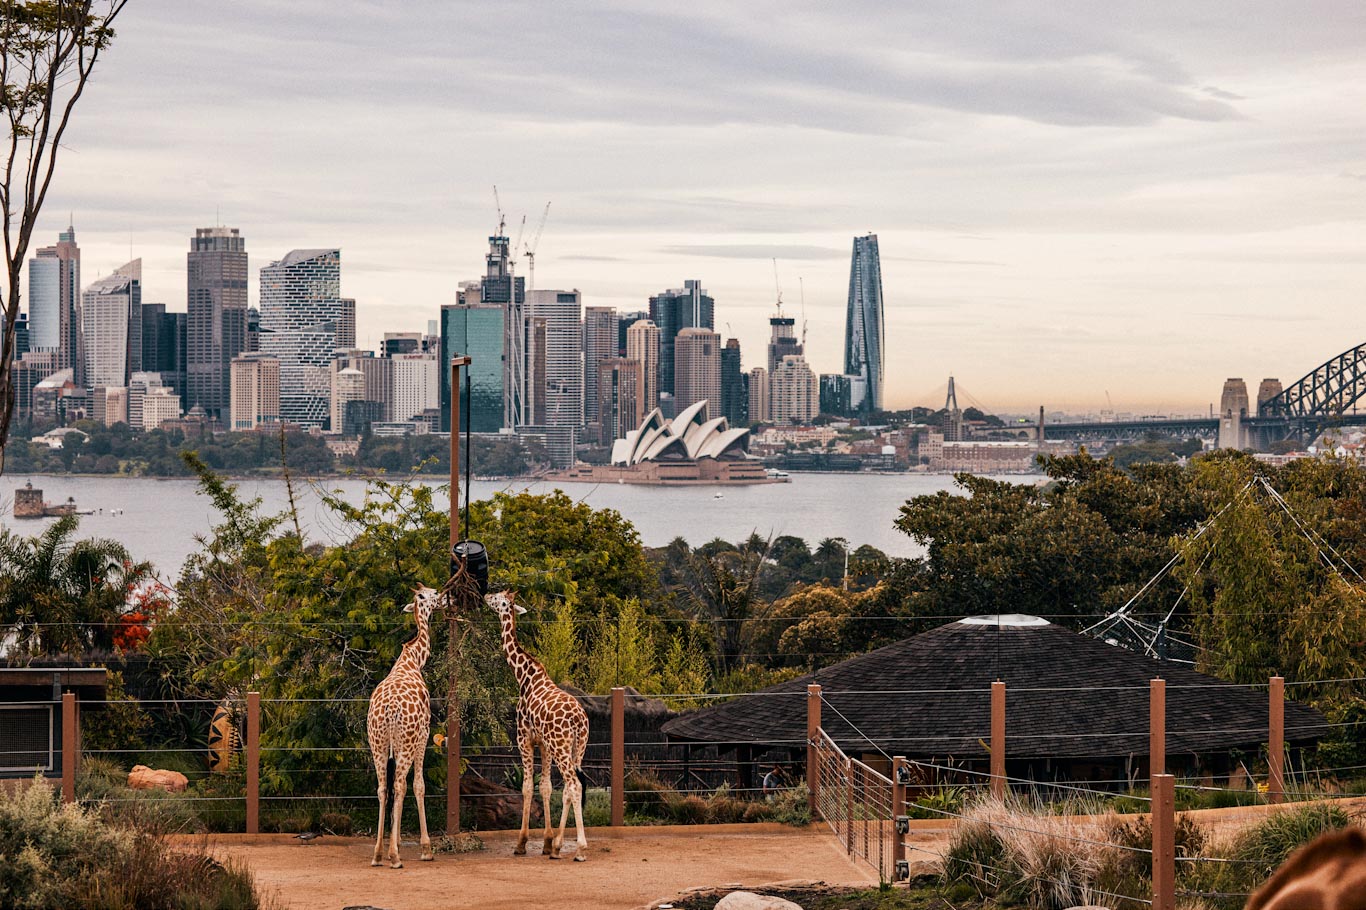 Giraffes eating at Taronga Zoo Sydney